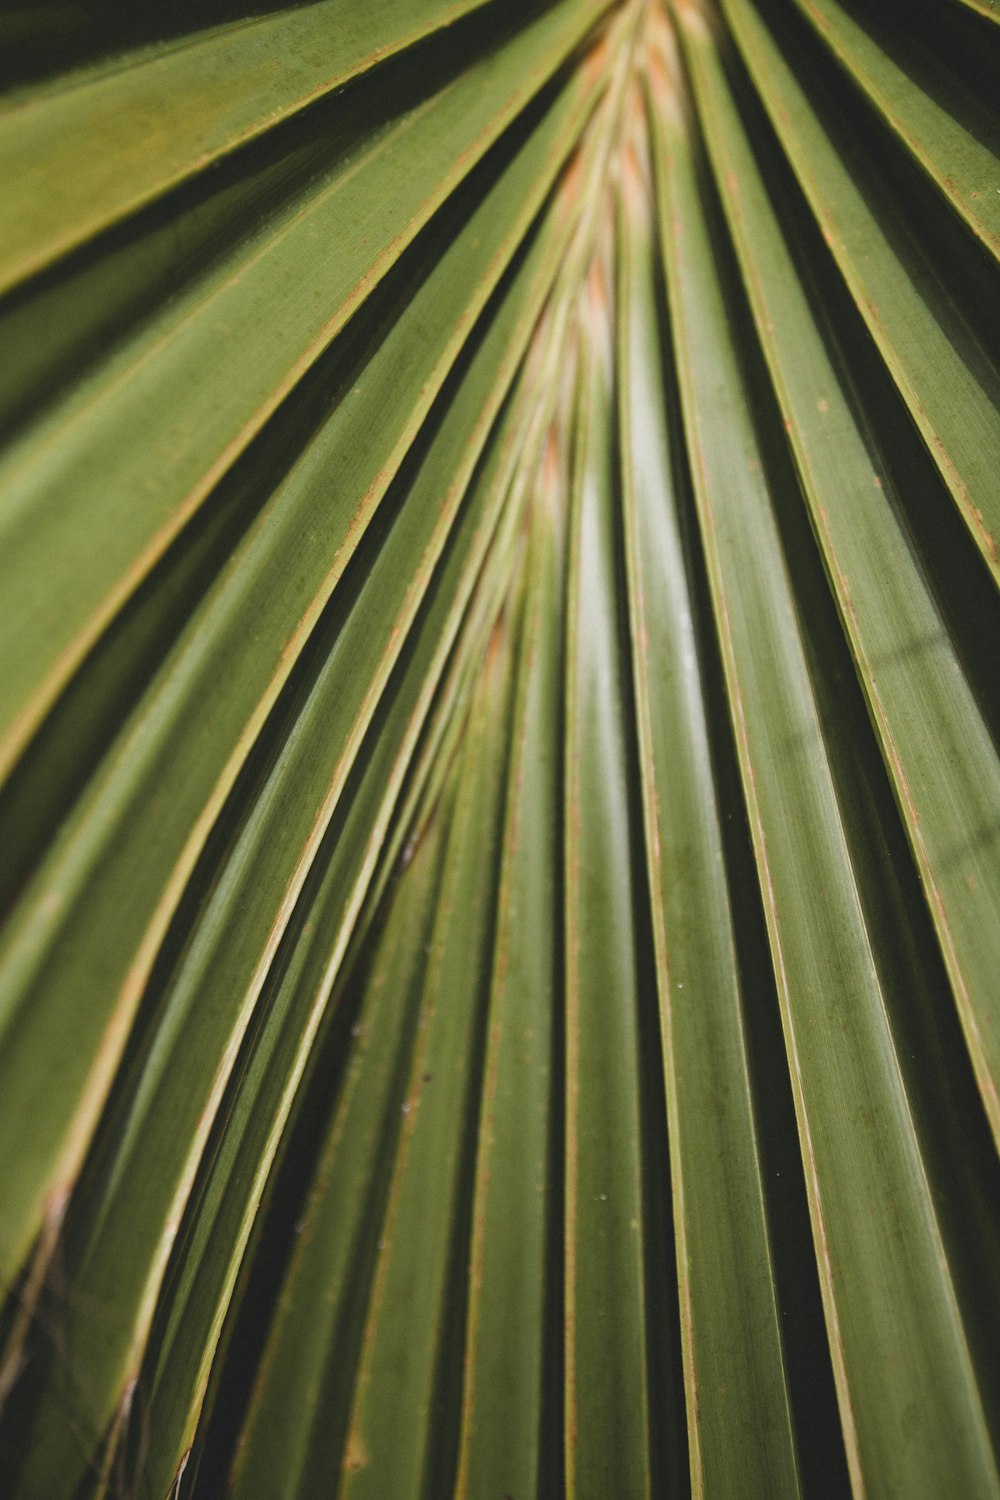 a close up of a green palm leaf